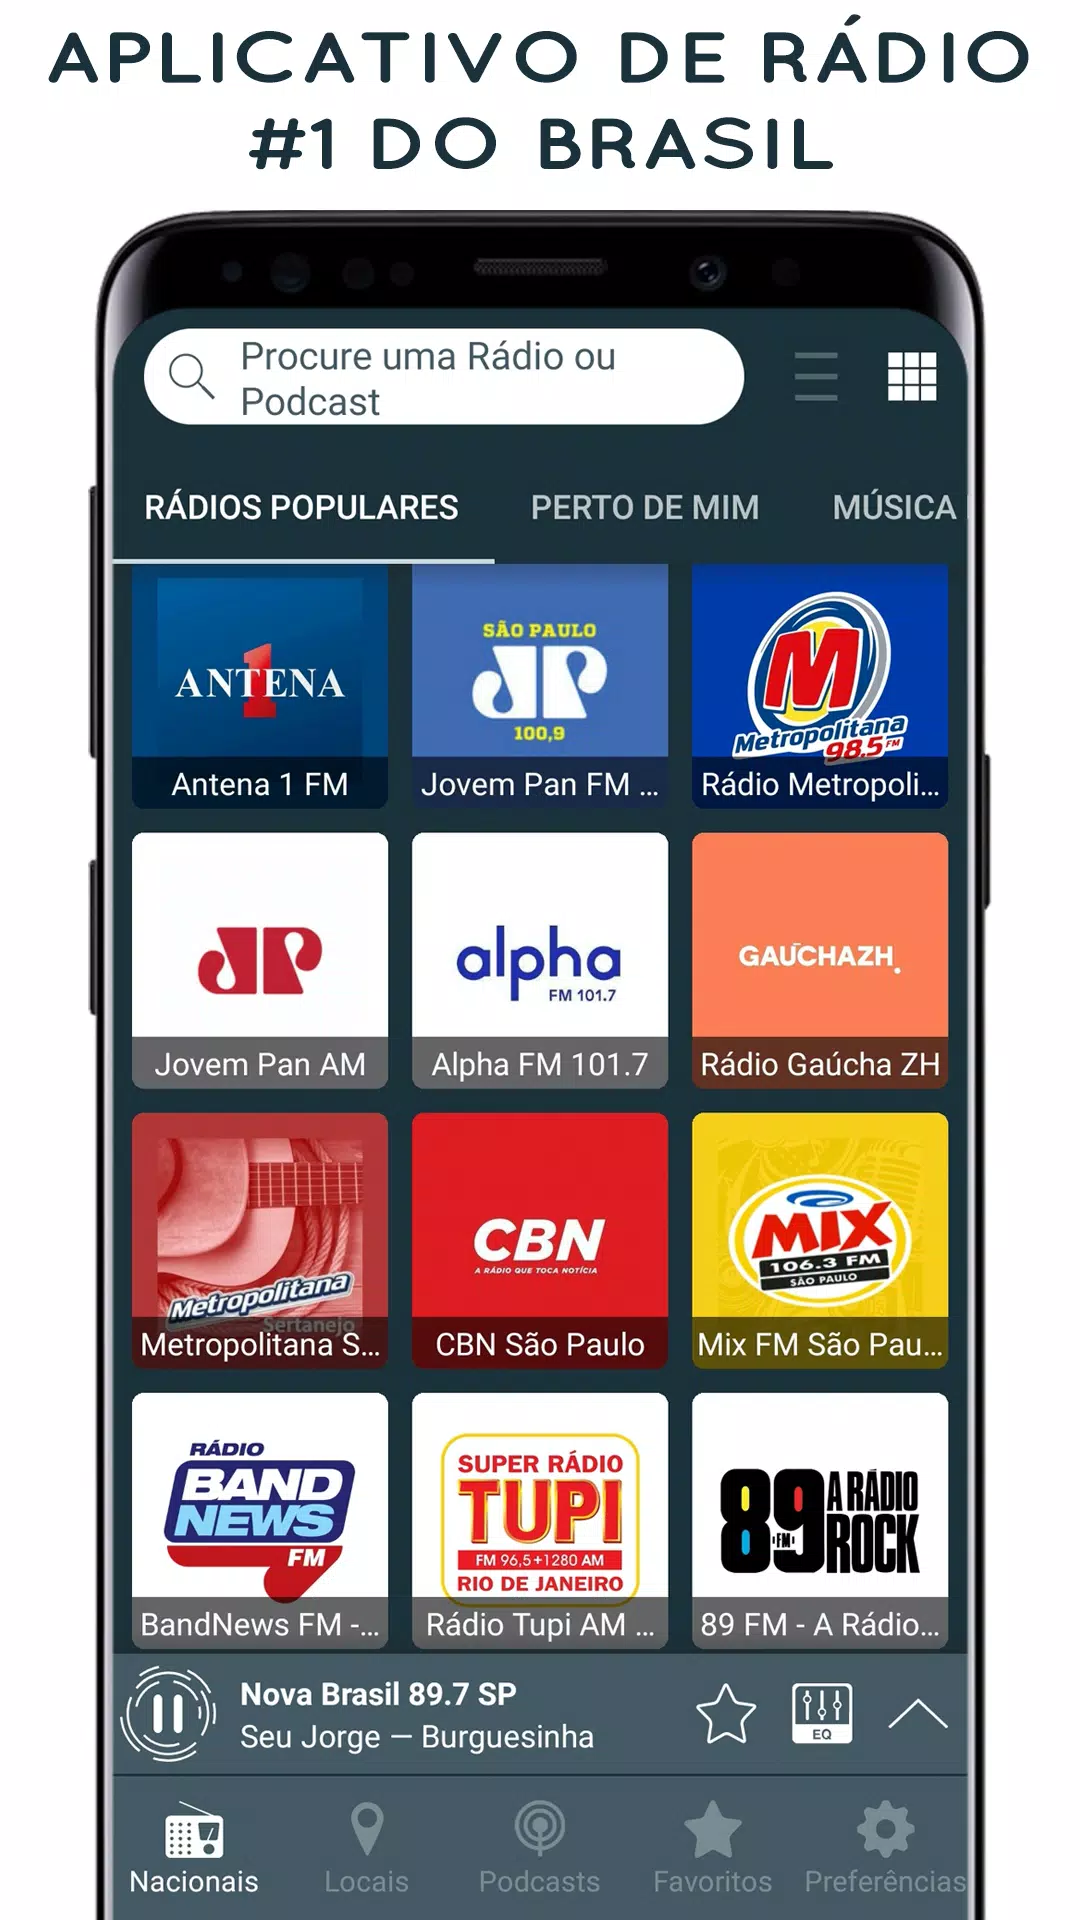 Radio Brazil - radio online for Android - APK Download